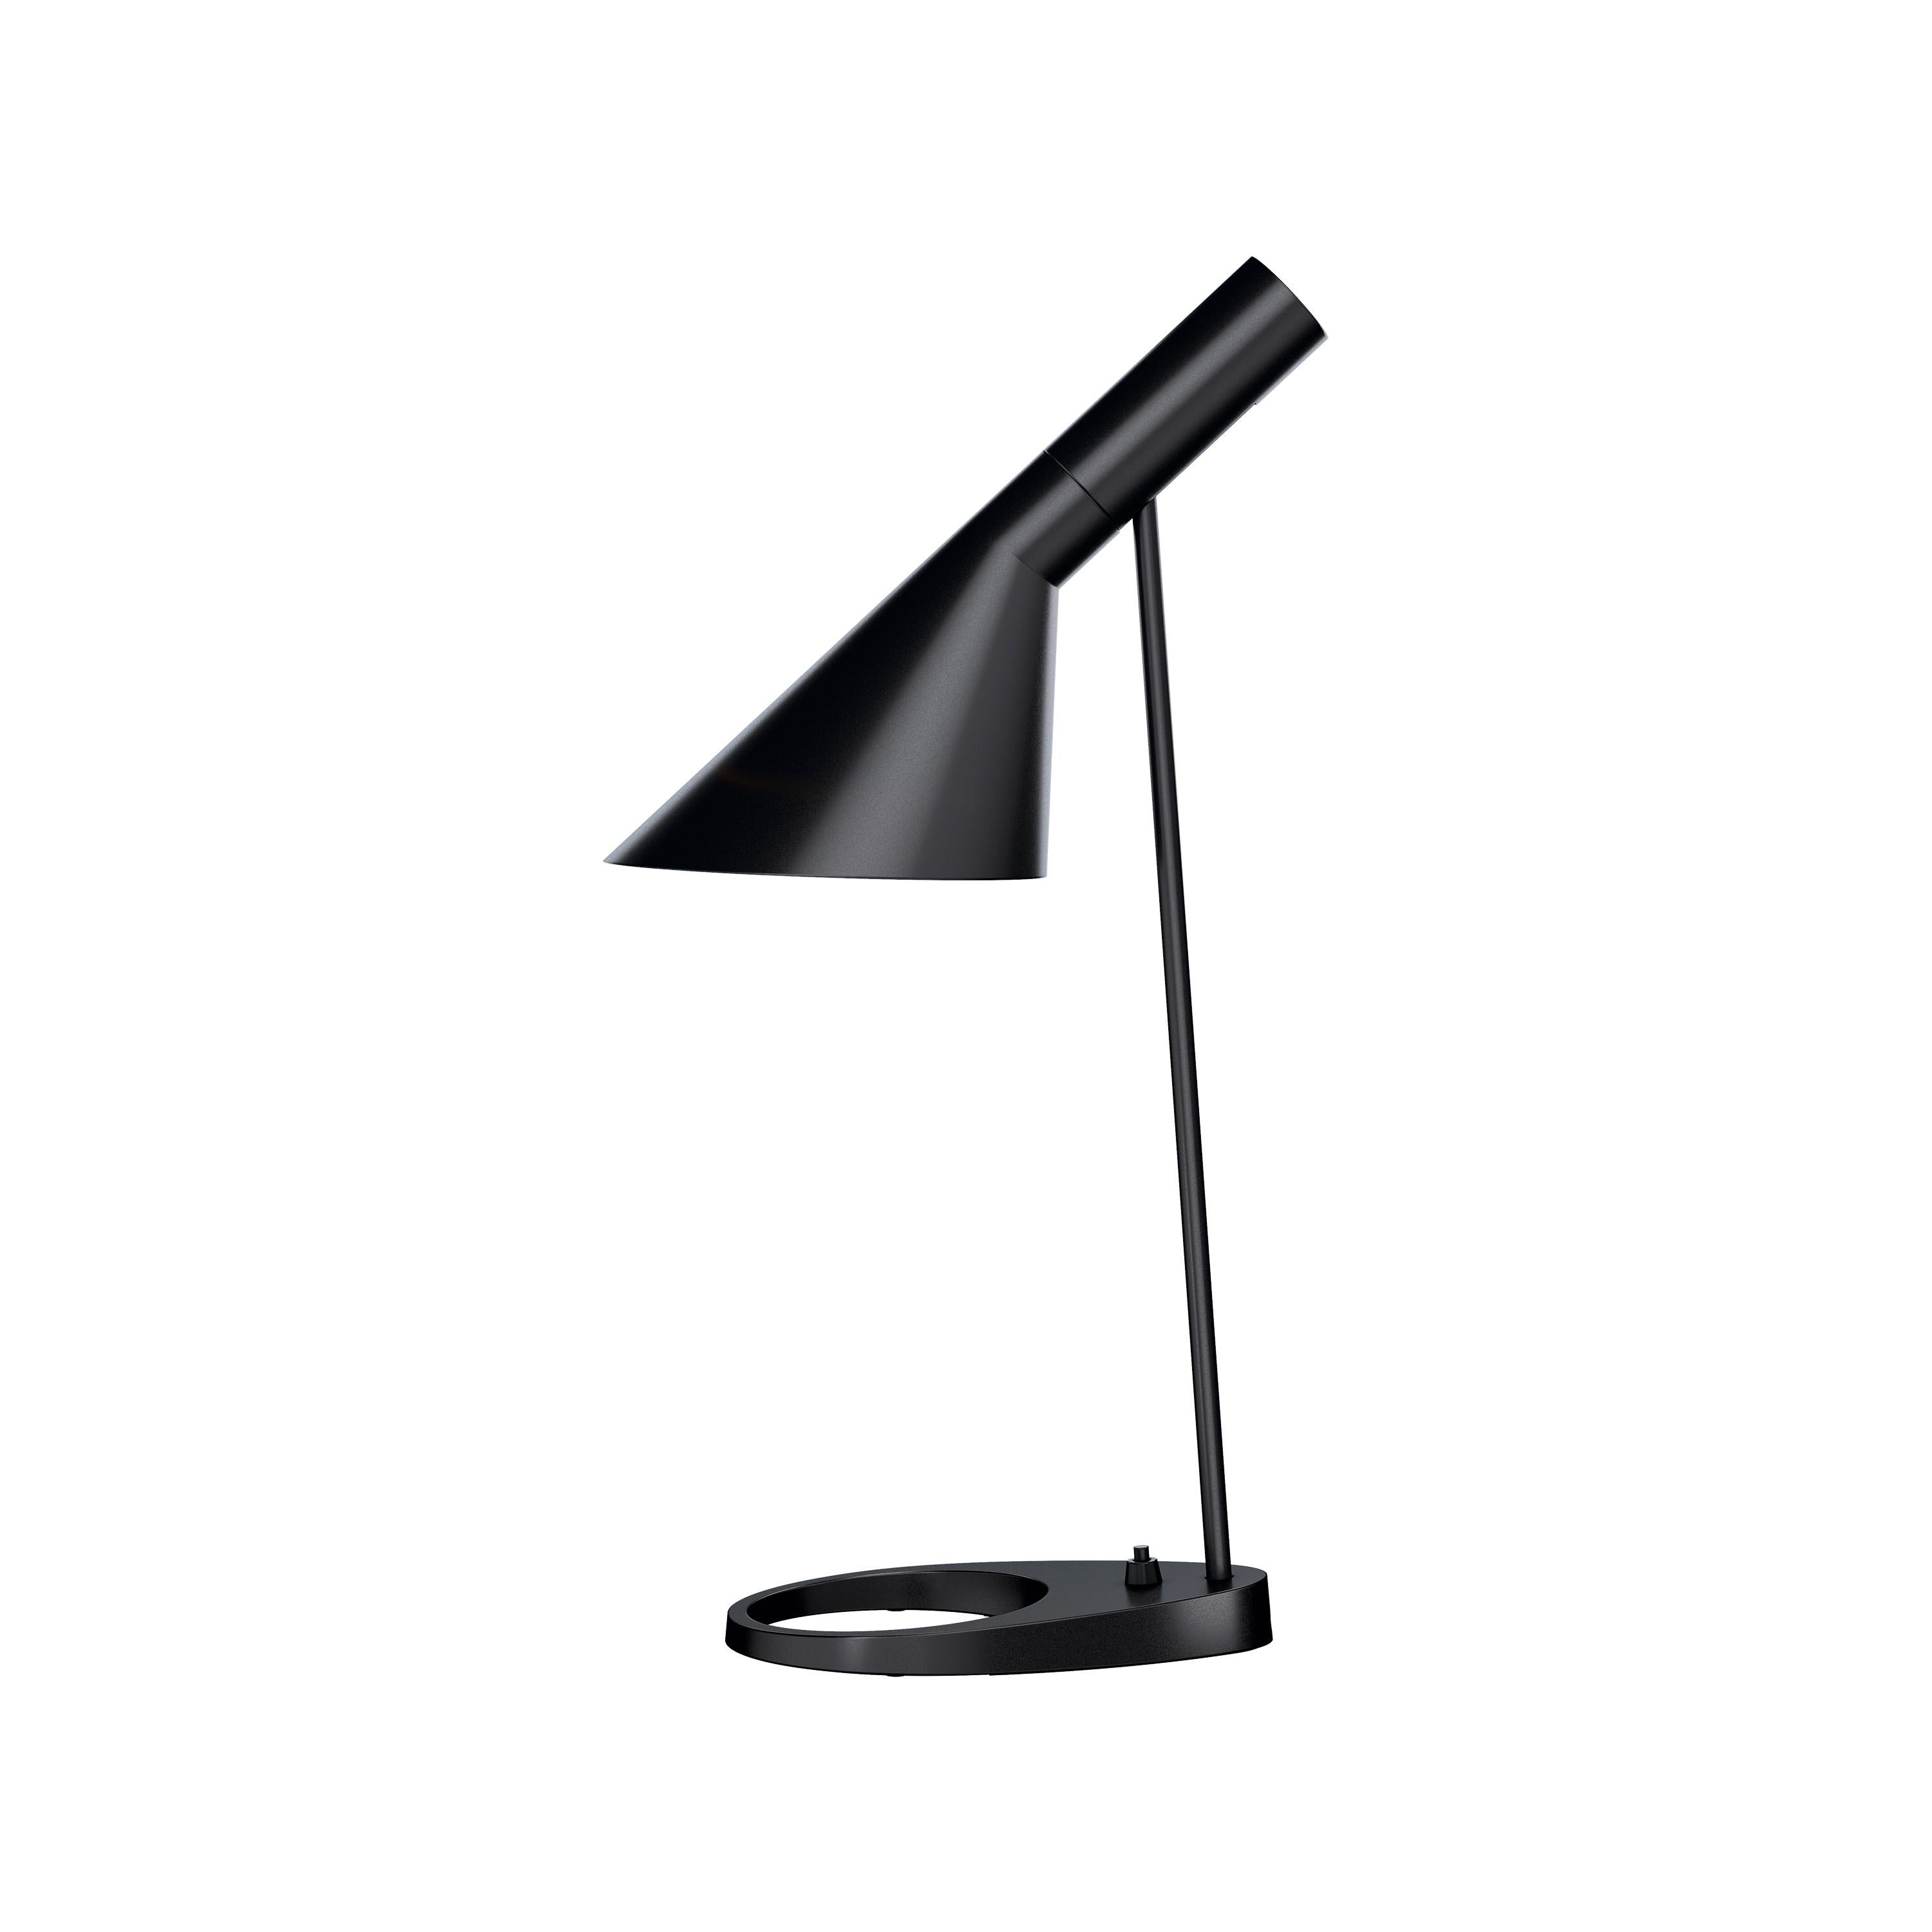 Arne Jacobsen 'Aj Mini' Table Lamp in Warm Grey for Louis Poulsen For Sale 3